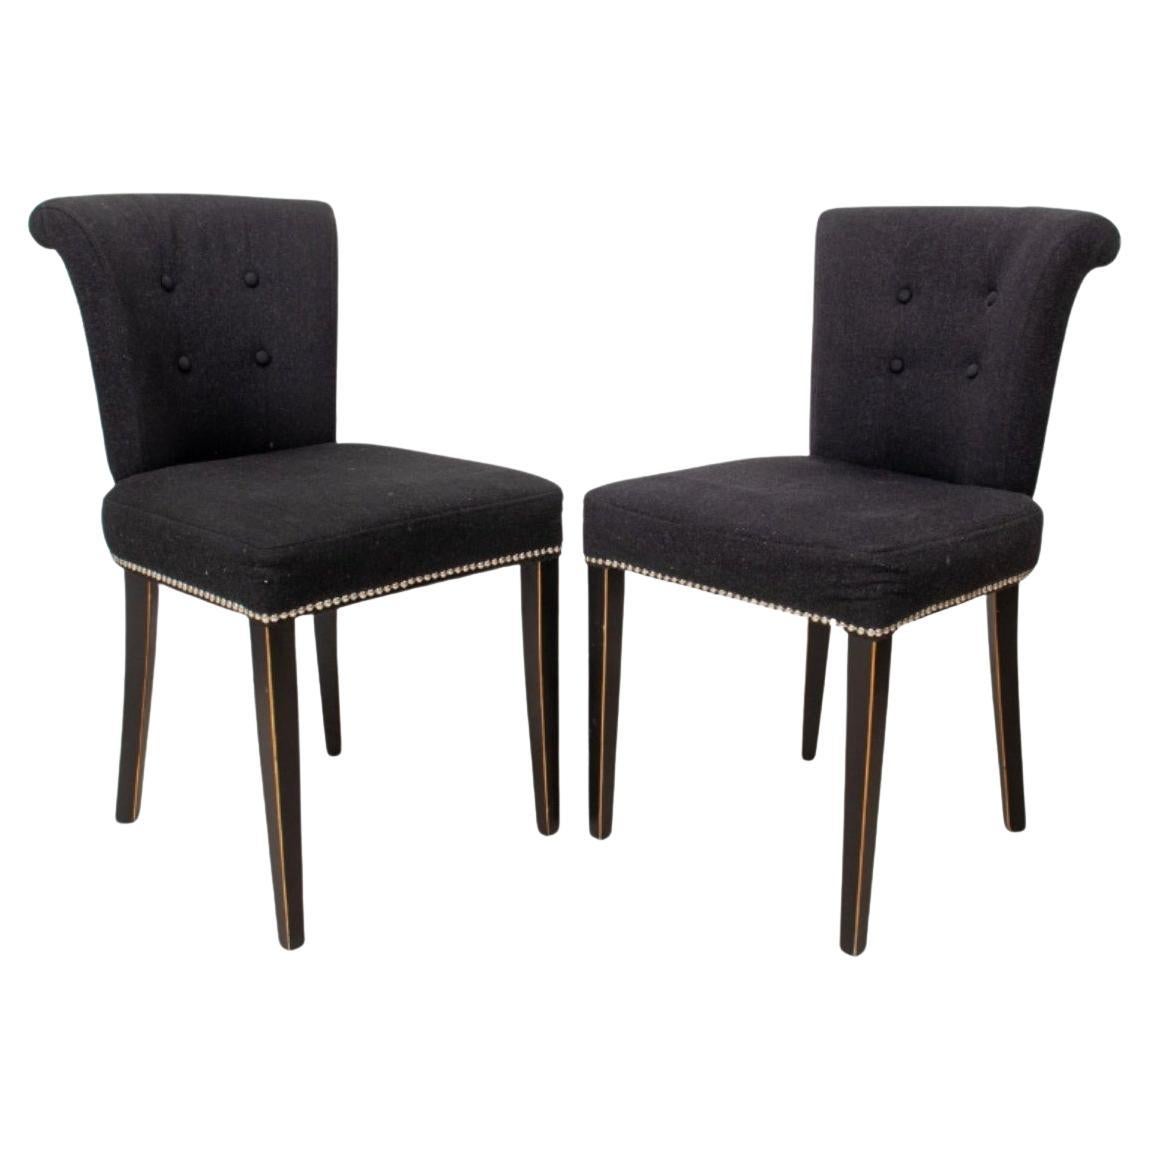 Modern Art Deco Revival Boudoir Chairs, Pair For Sale